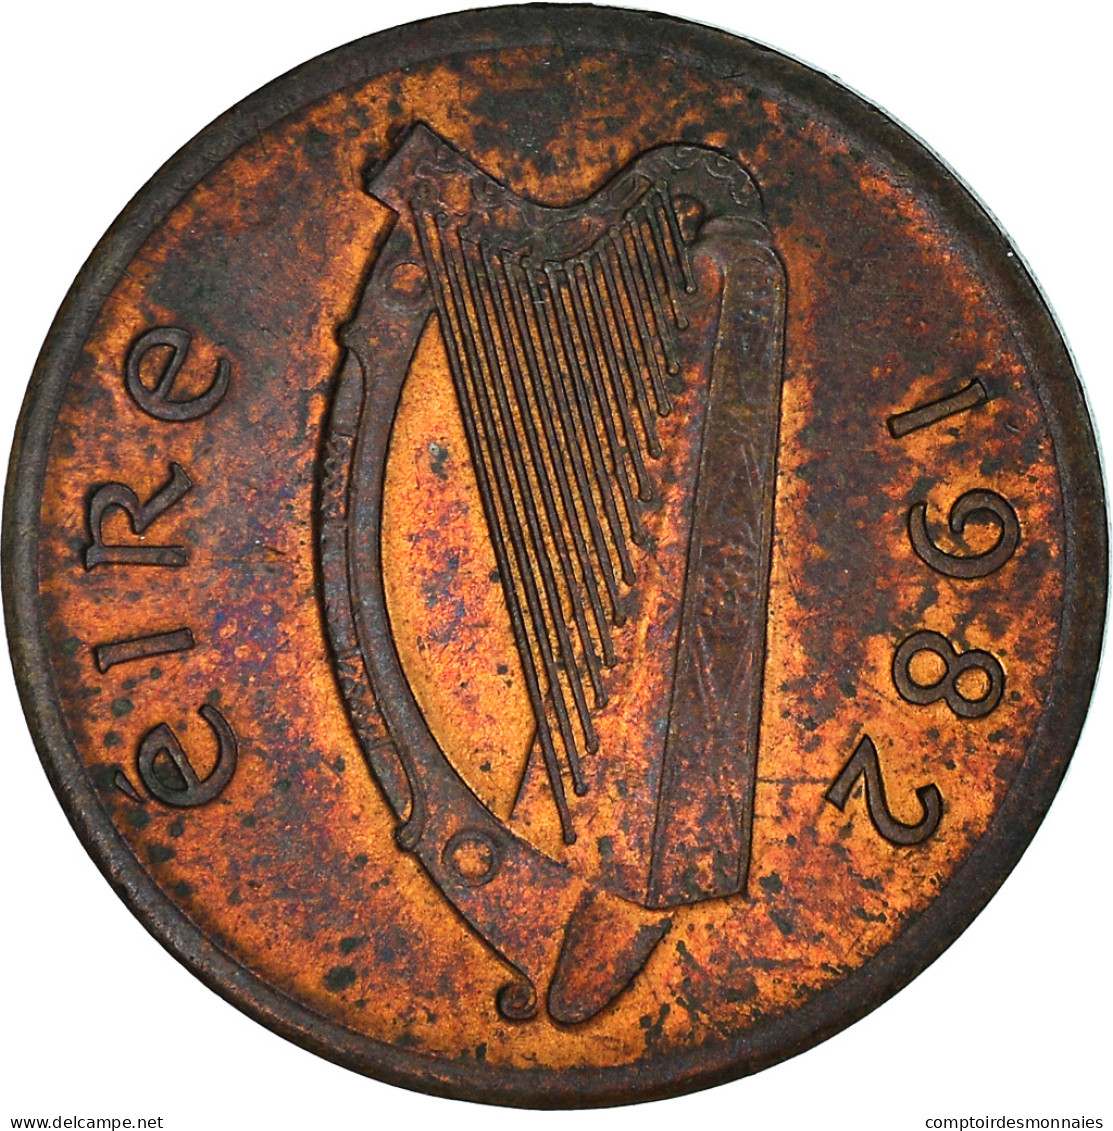 Monnaie, IRELAND REPUBLIC, 1/2 Penny, 1982, TB+, Bronze, KM:19 - Ierland